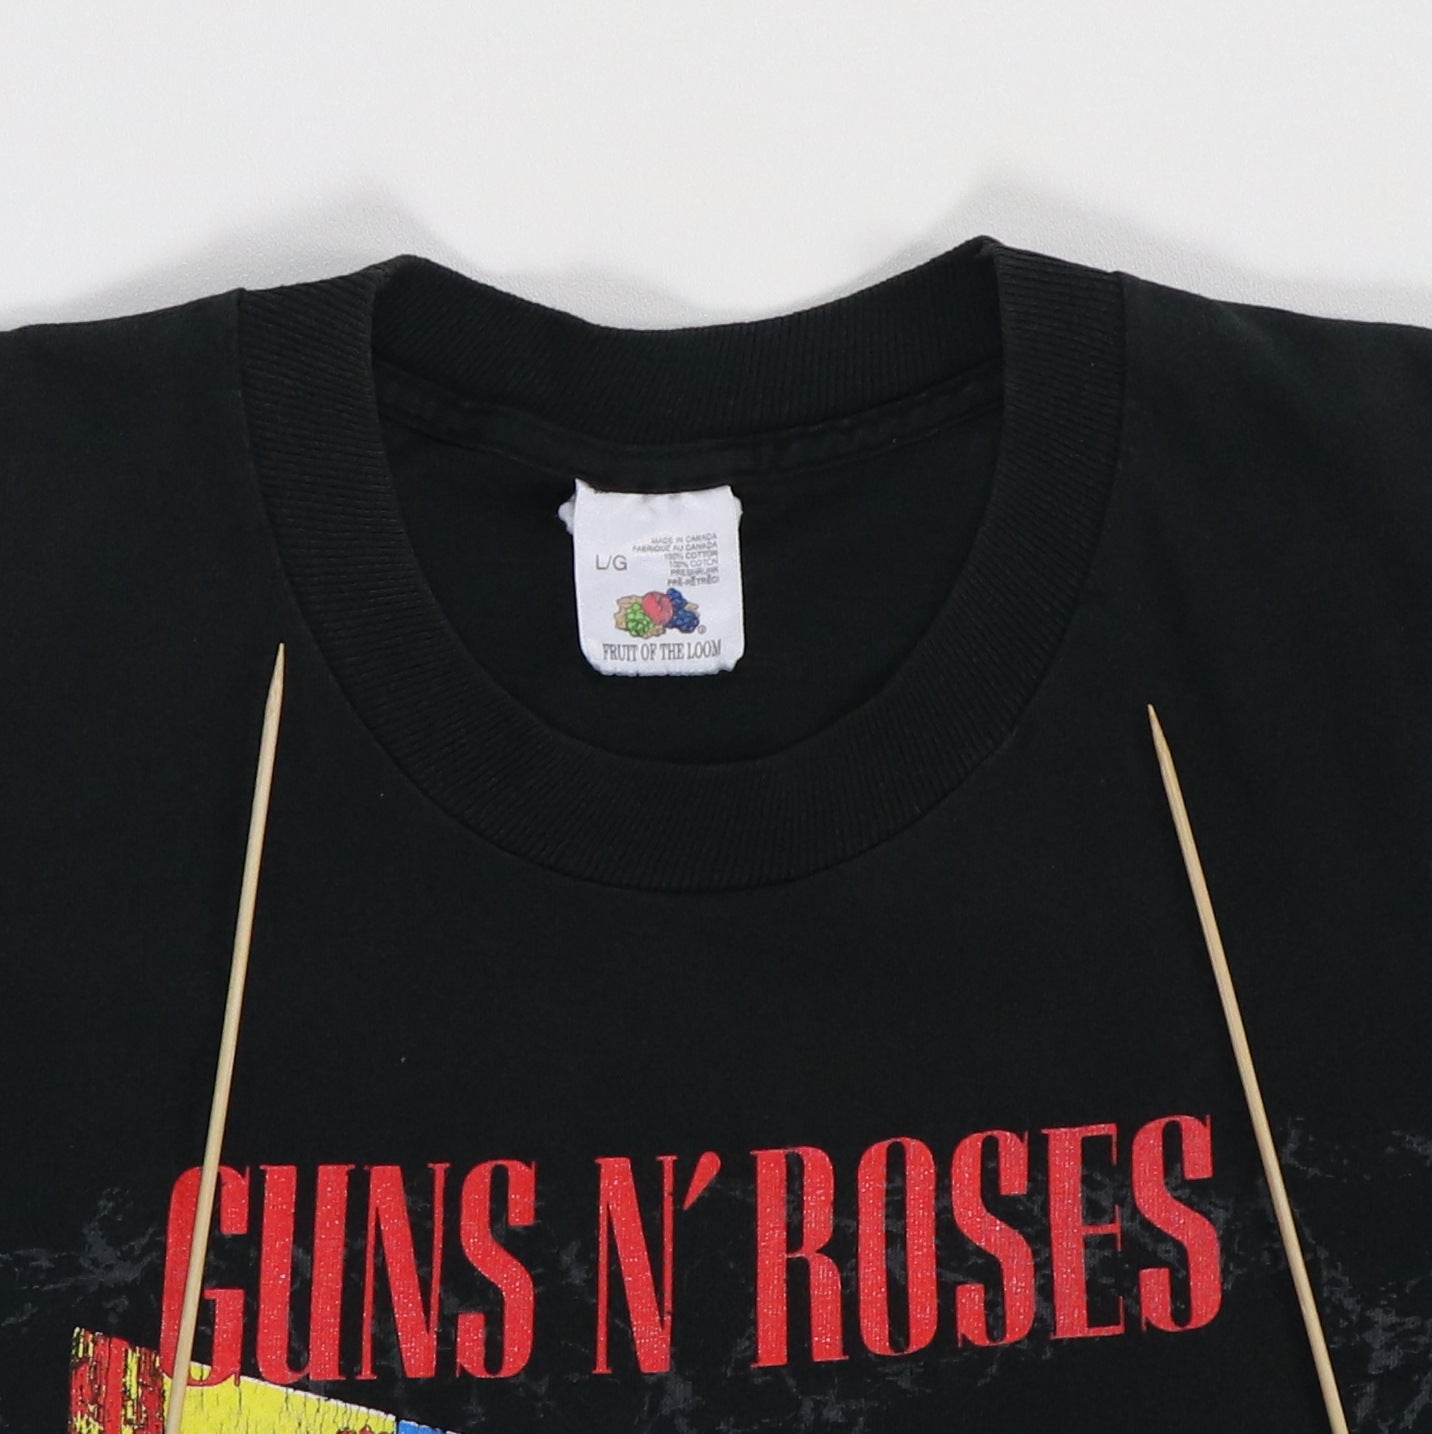 1992 Guns N Roses Metalica Tour Shirt